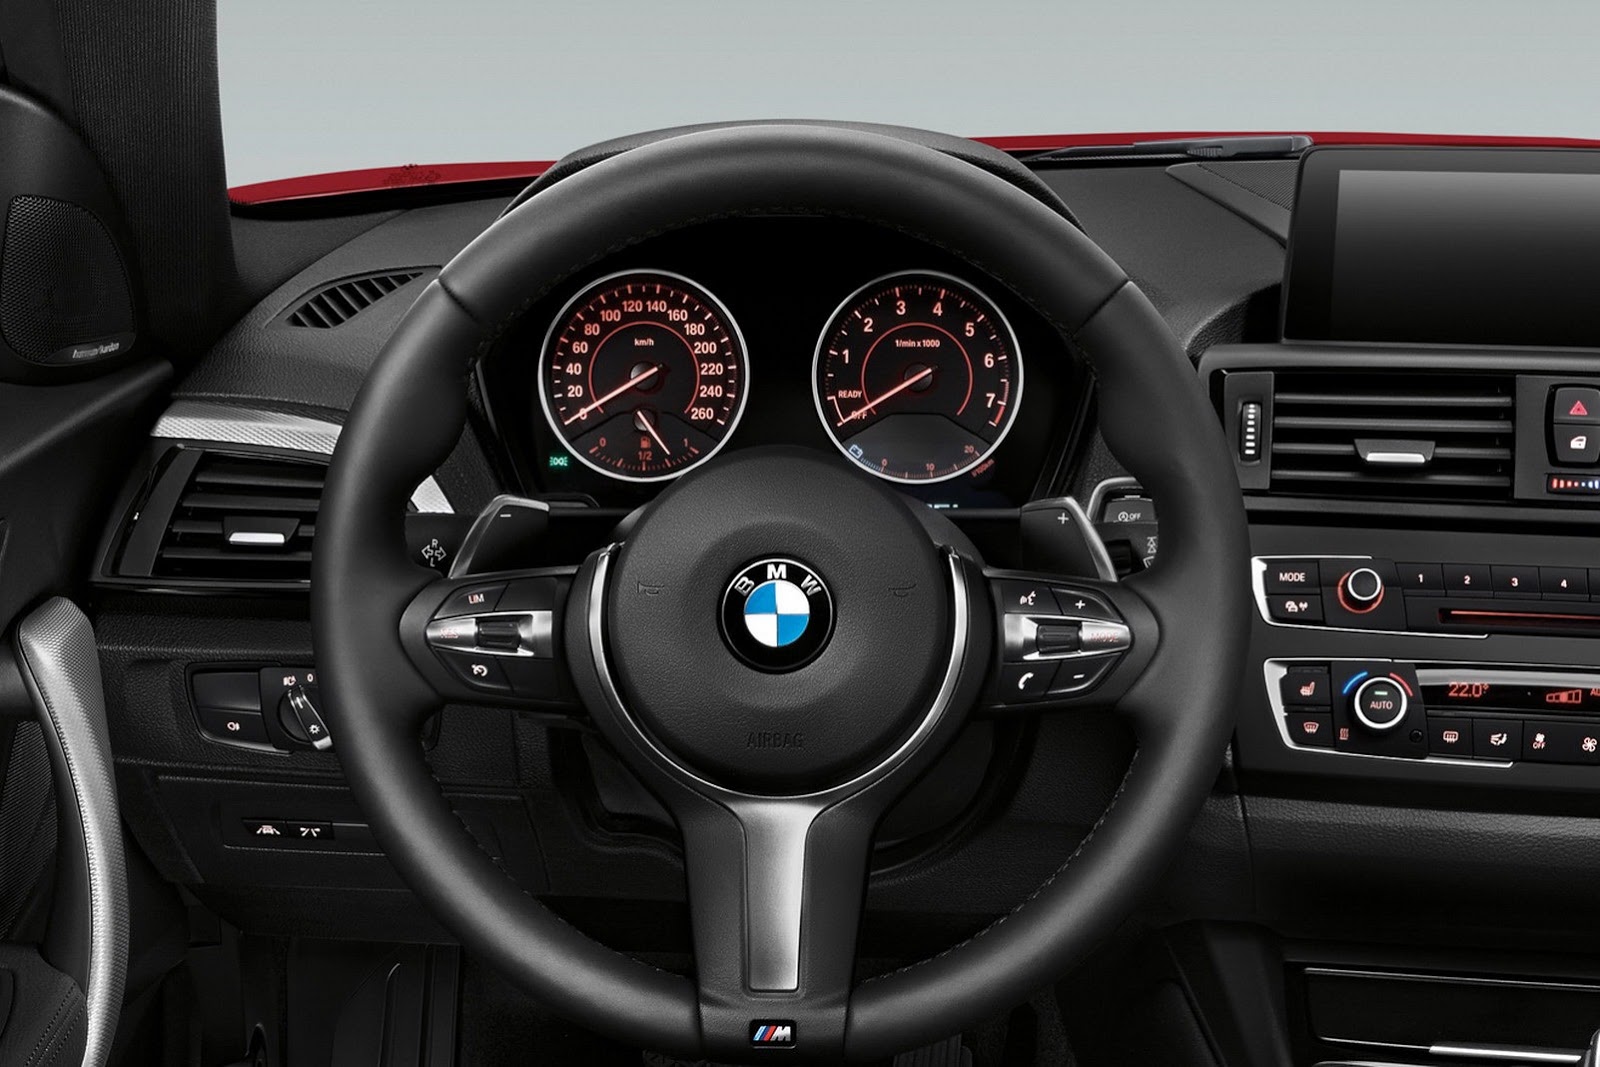 BMW Serie 2 interior